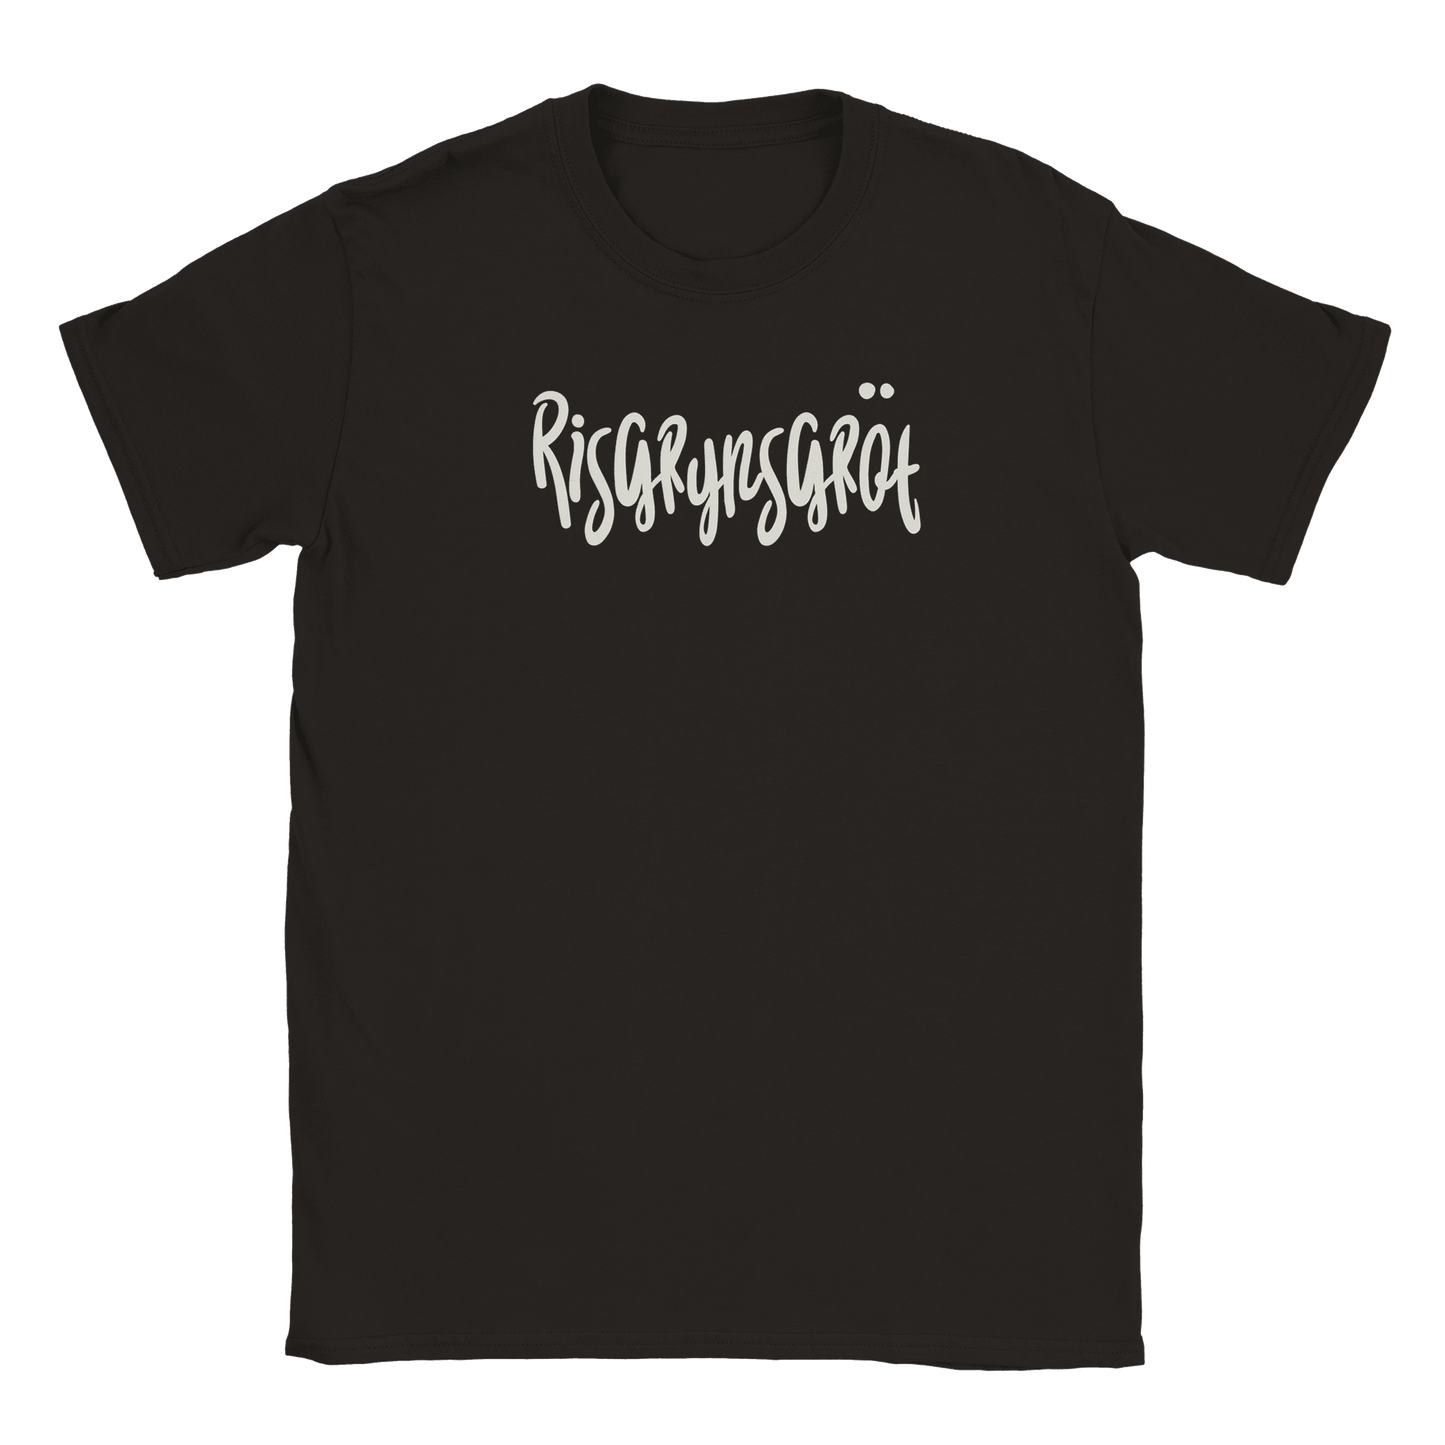 Risgrynsgröt - T-shirt Svart